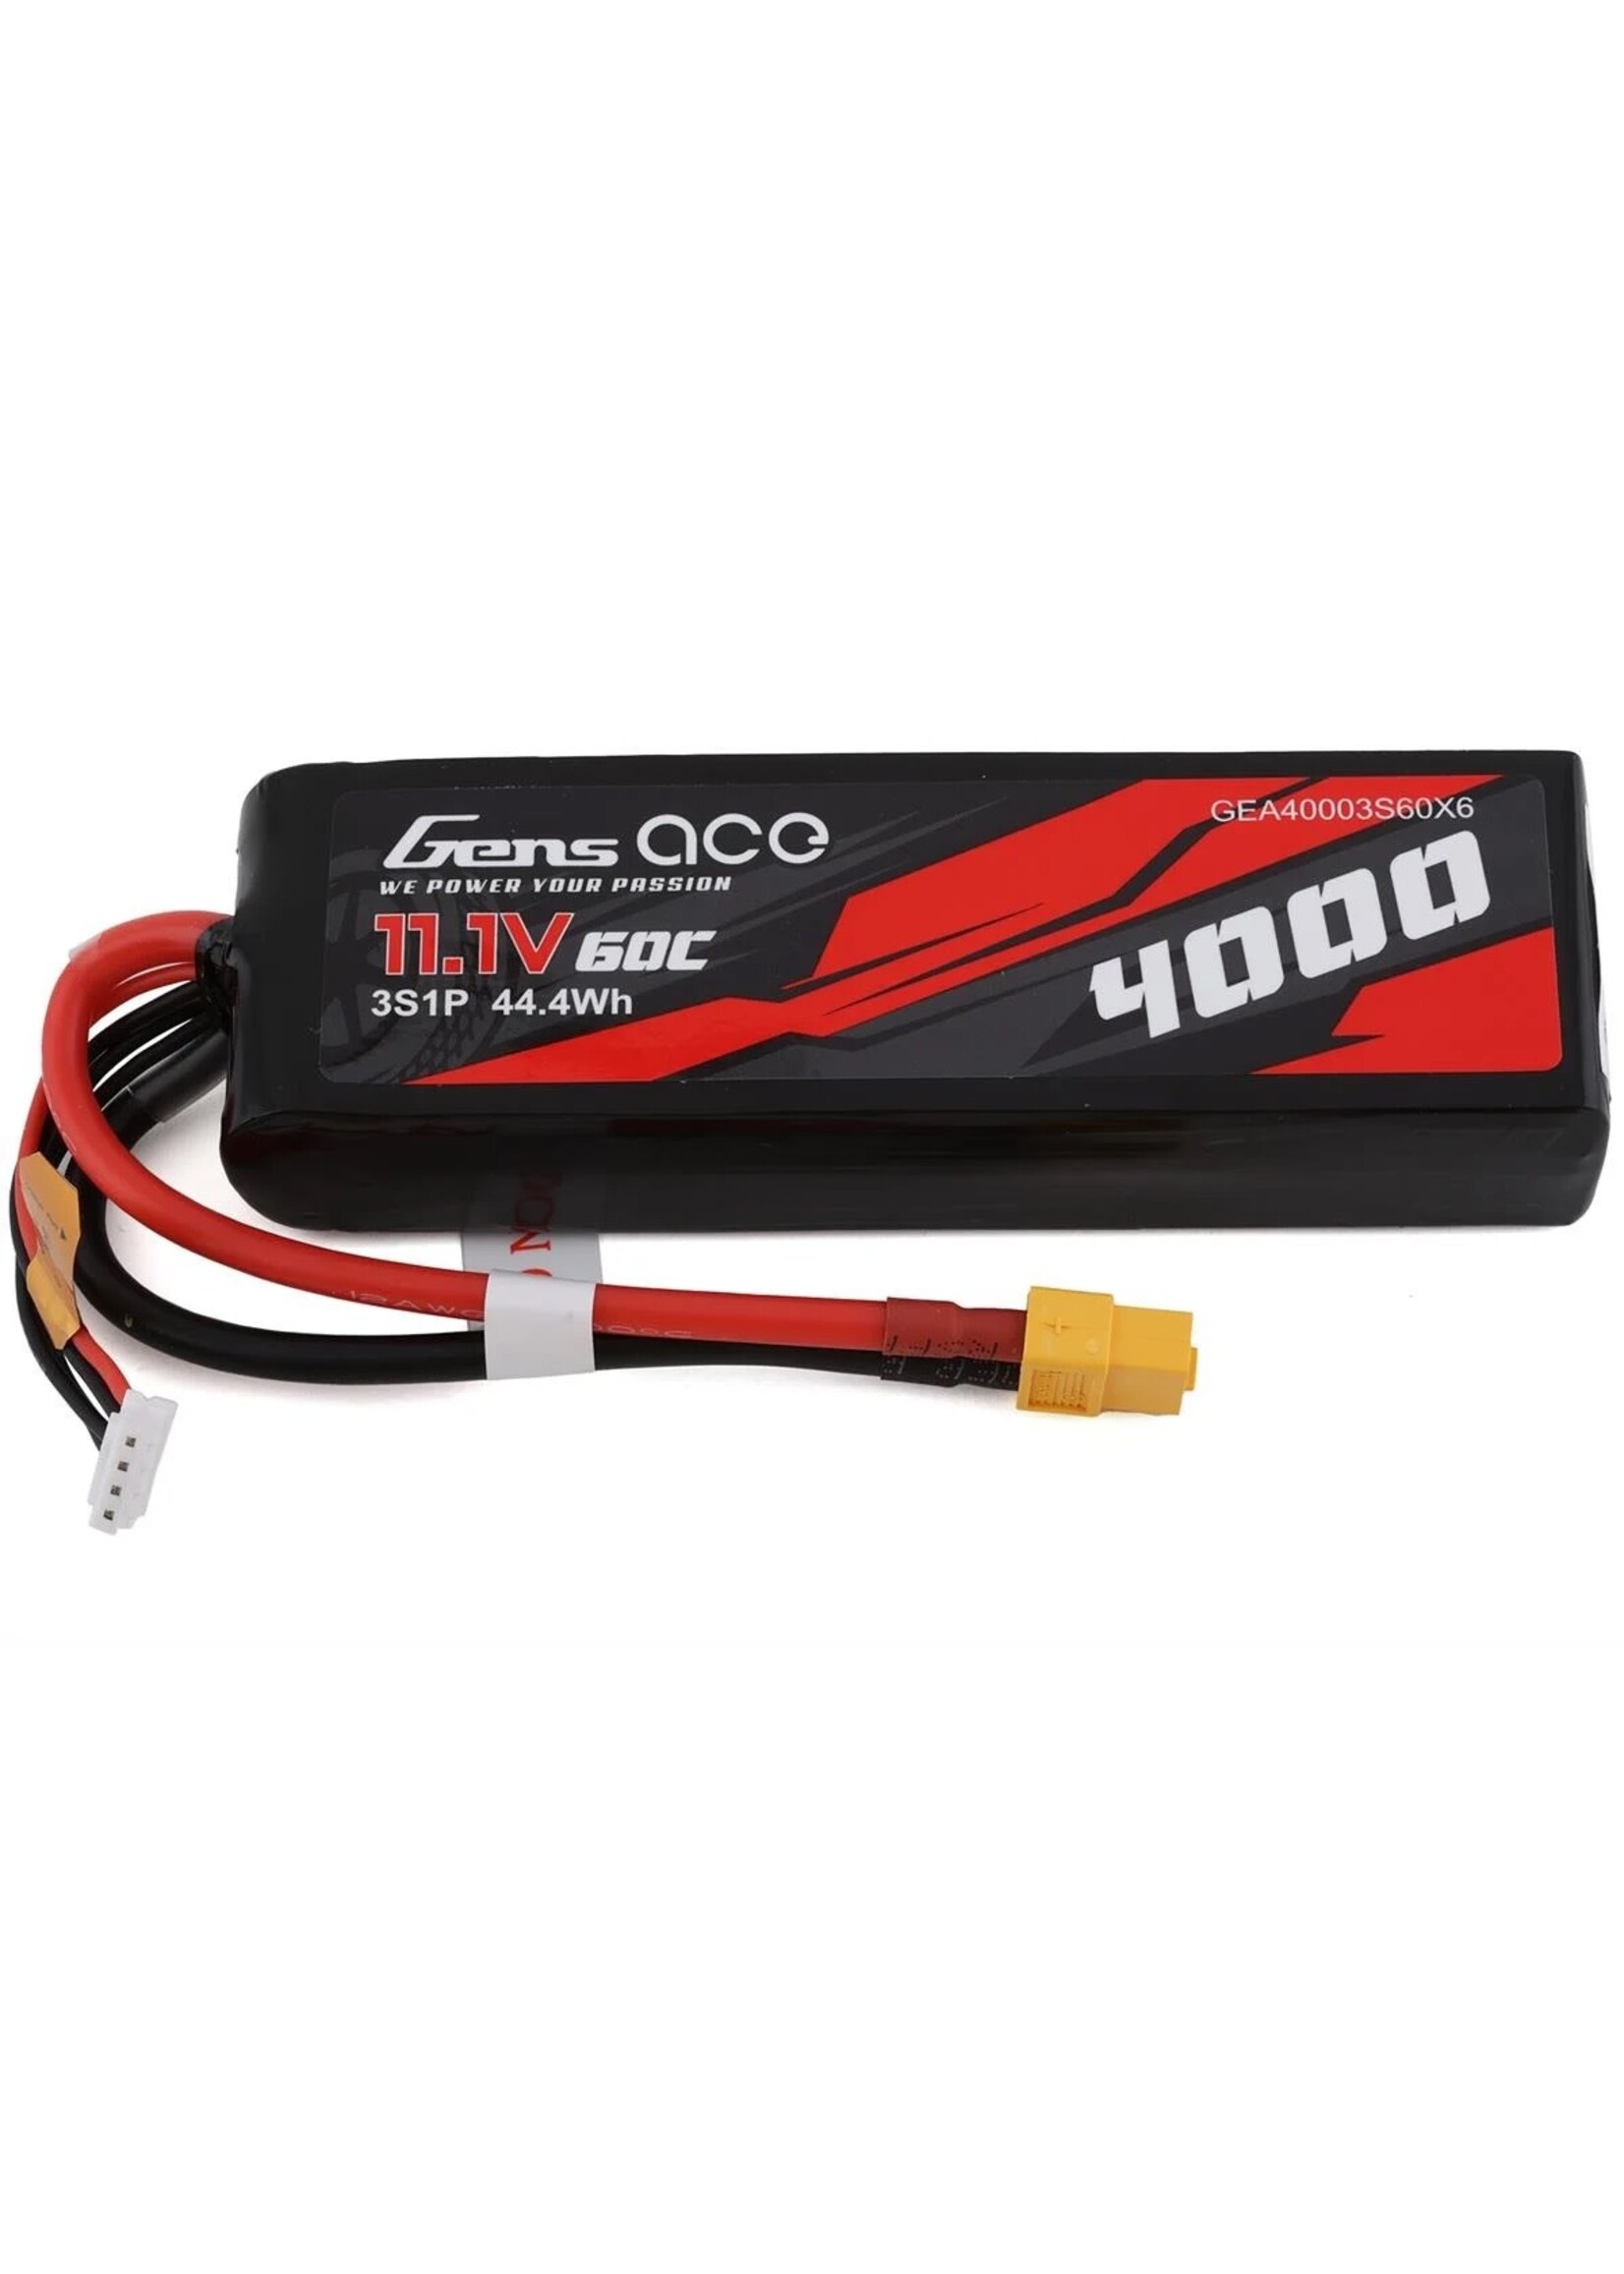 Gens ace GEA40003S60X6 Gens Ace 3s LiPo Battery 60C (11.1V/4000mAh) w/XT-60 Connector